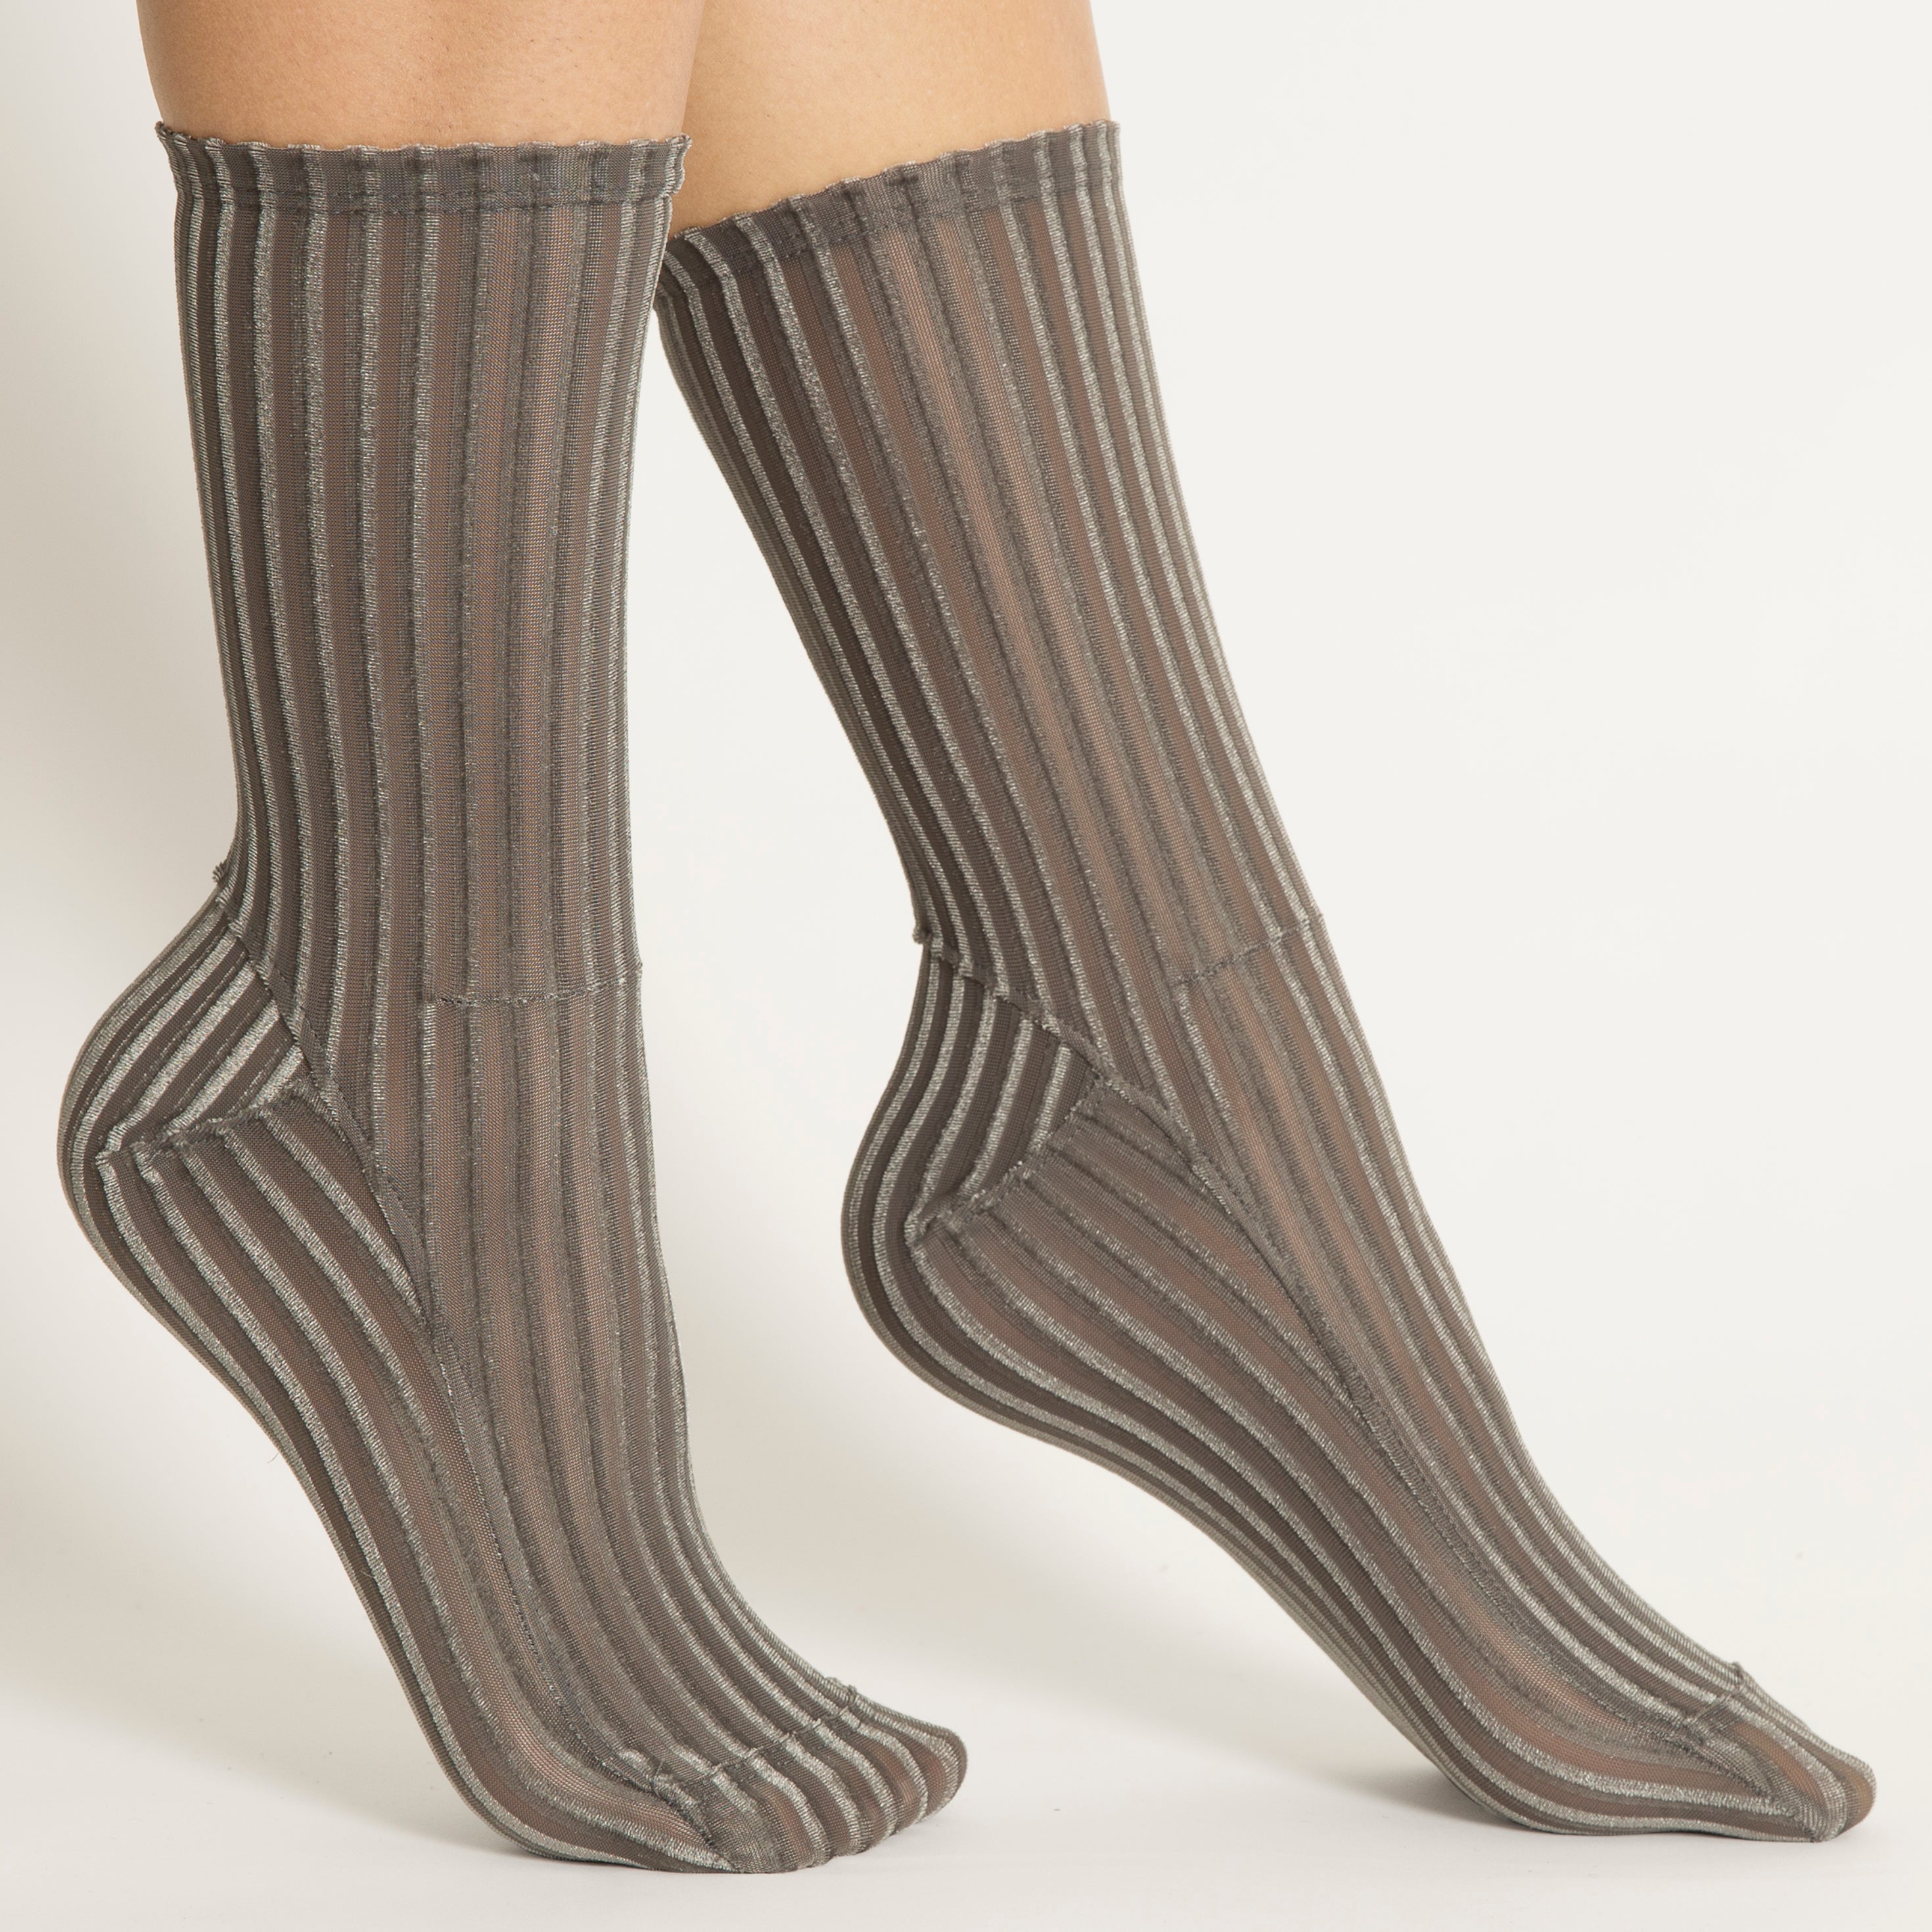 SAMPLE Solid Sea Foam Mesh Socks – Darner Socks